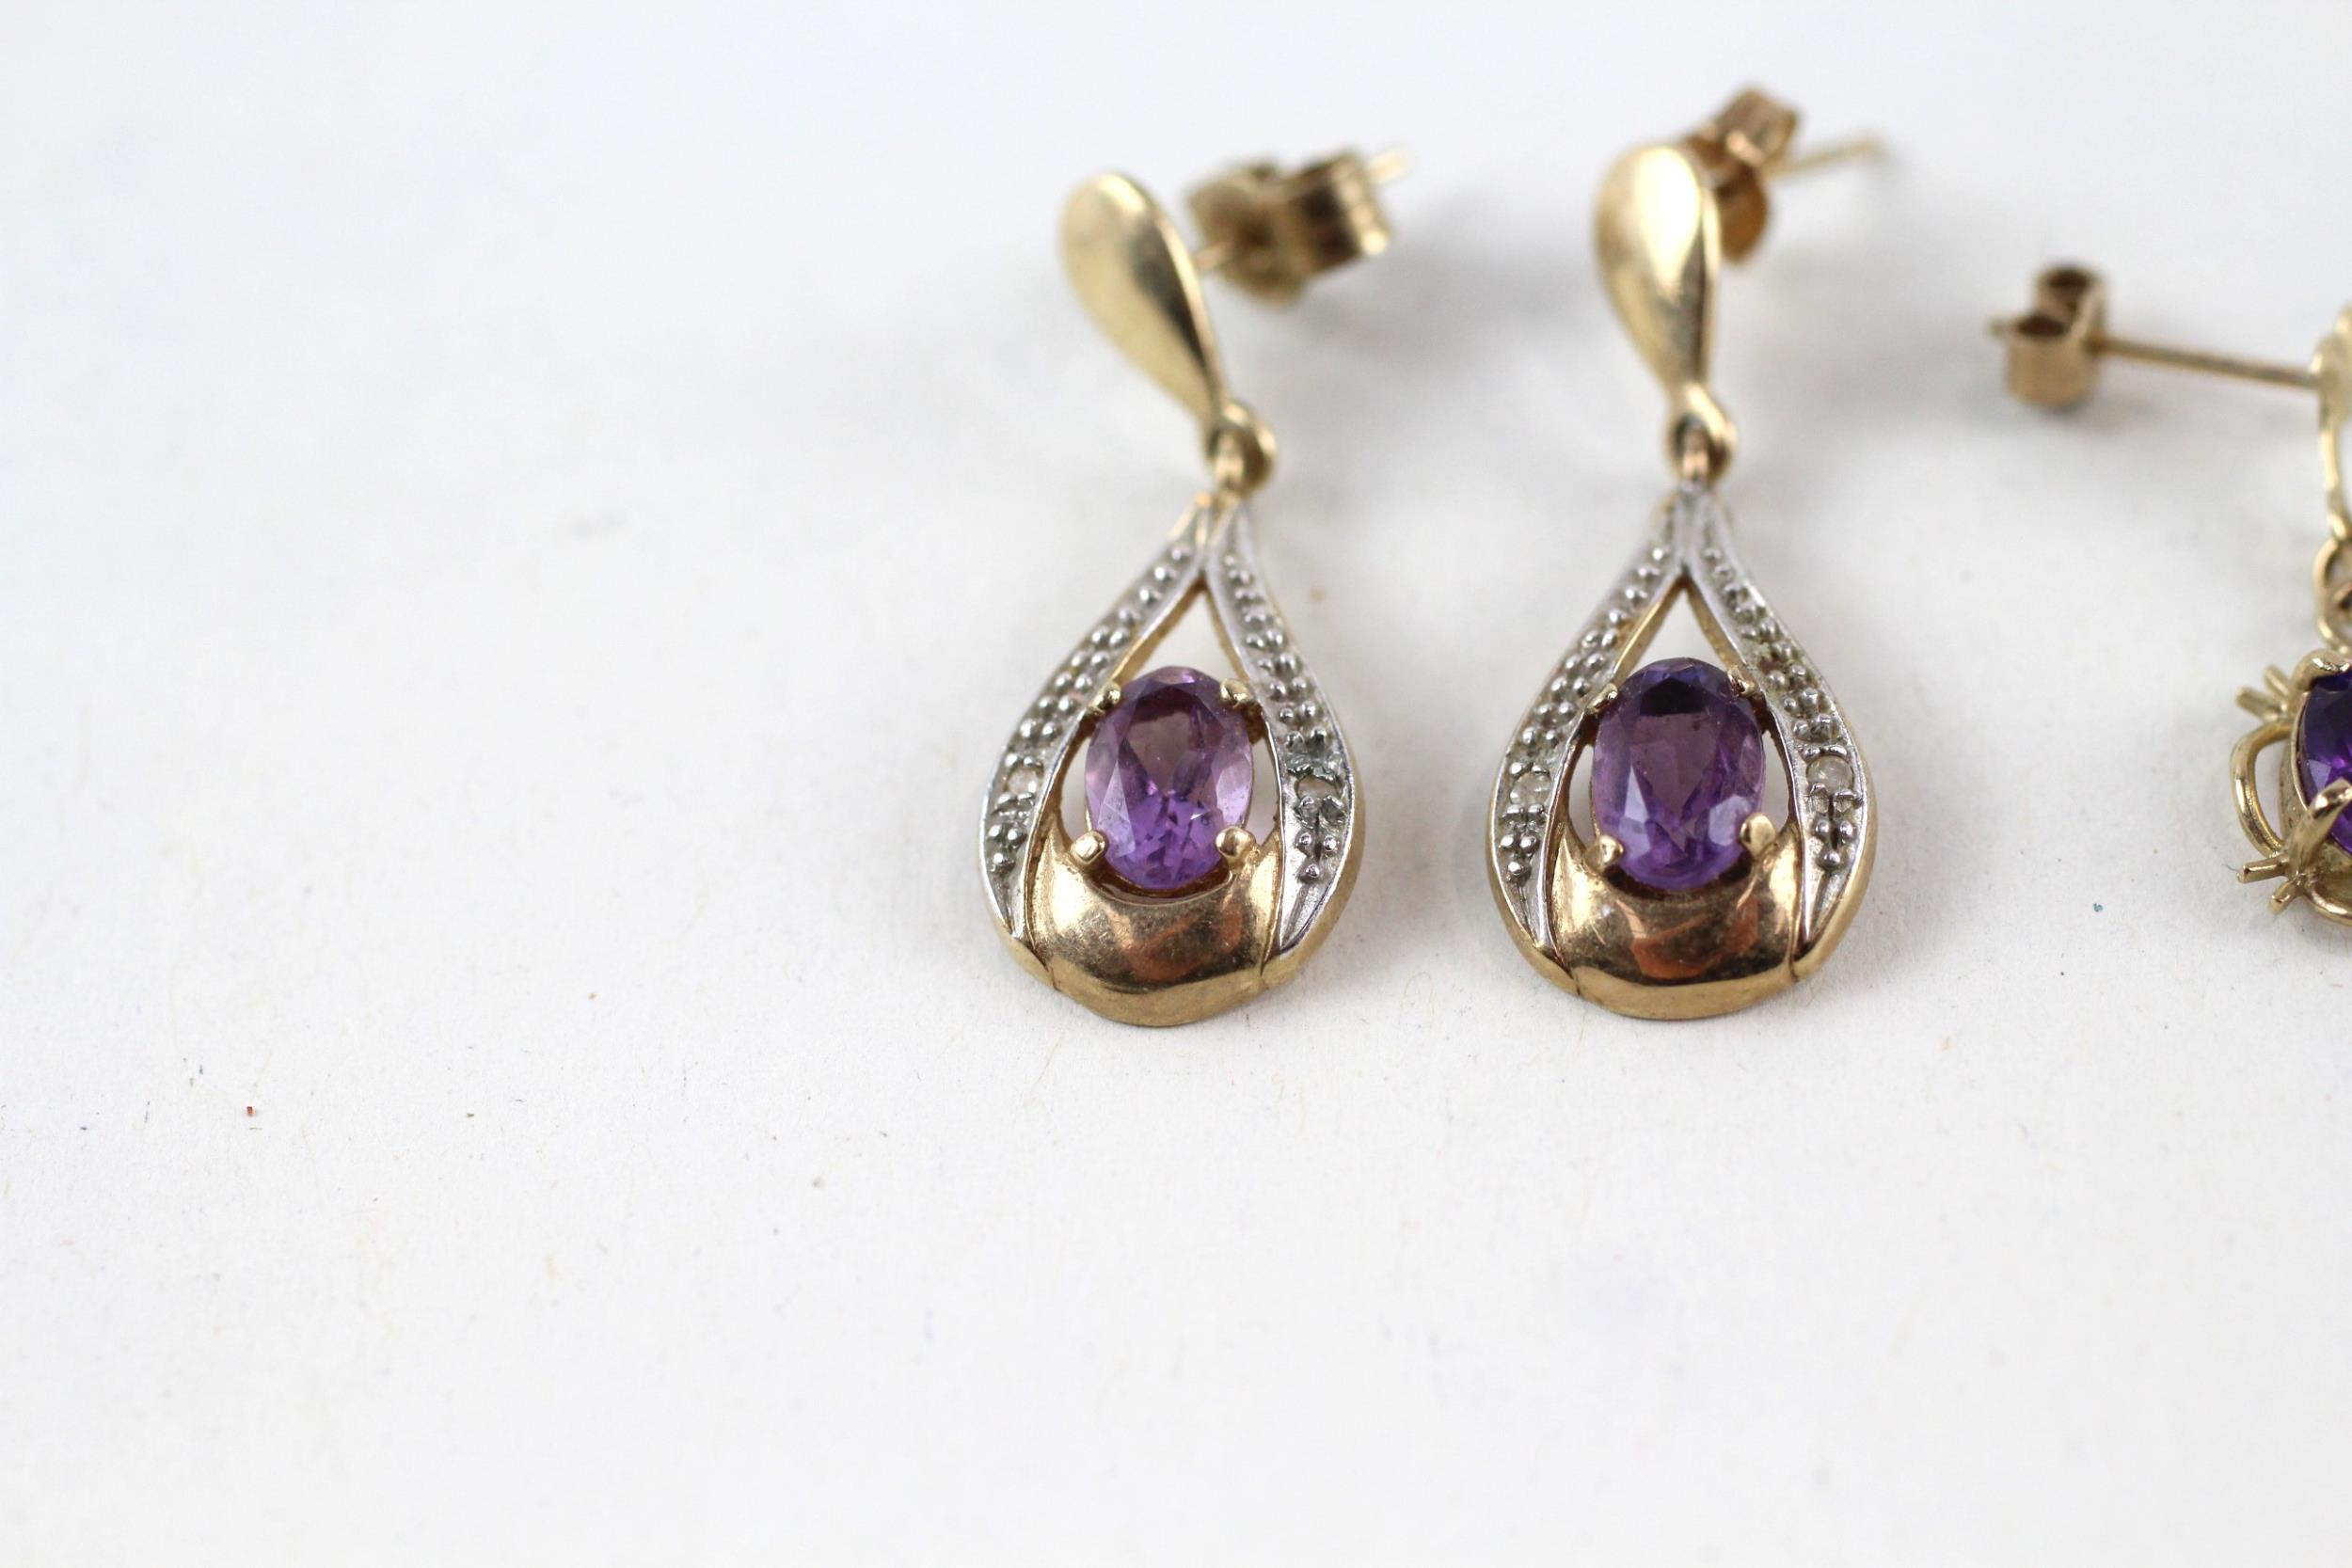 2x 9ct gold amethyst & diamond drop earrings (3g) - Image 2 of 5